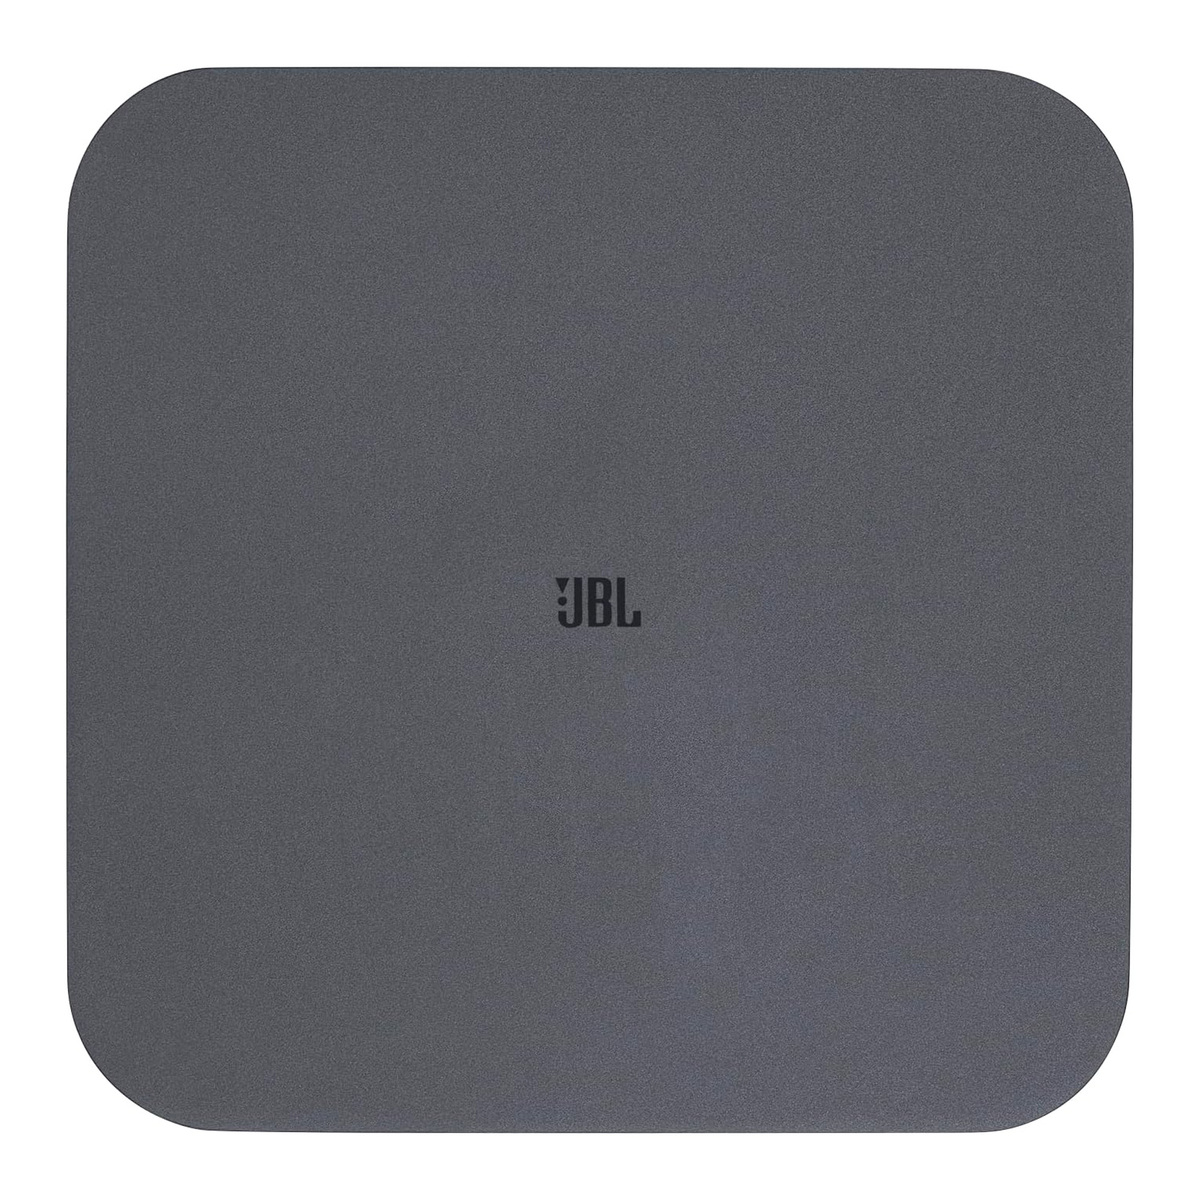 JBL 11.1.4-Channel Soundbar with Detachable Surround Speakers, Black, BAR 1300